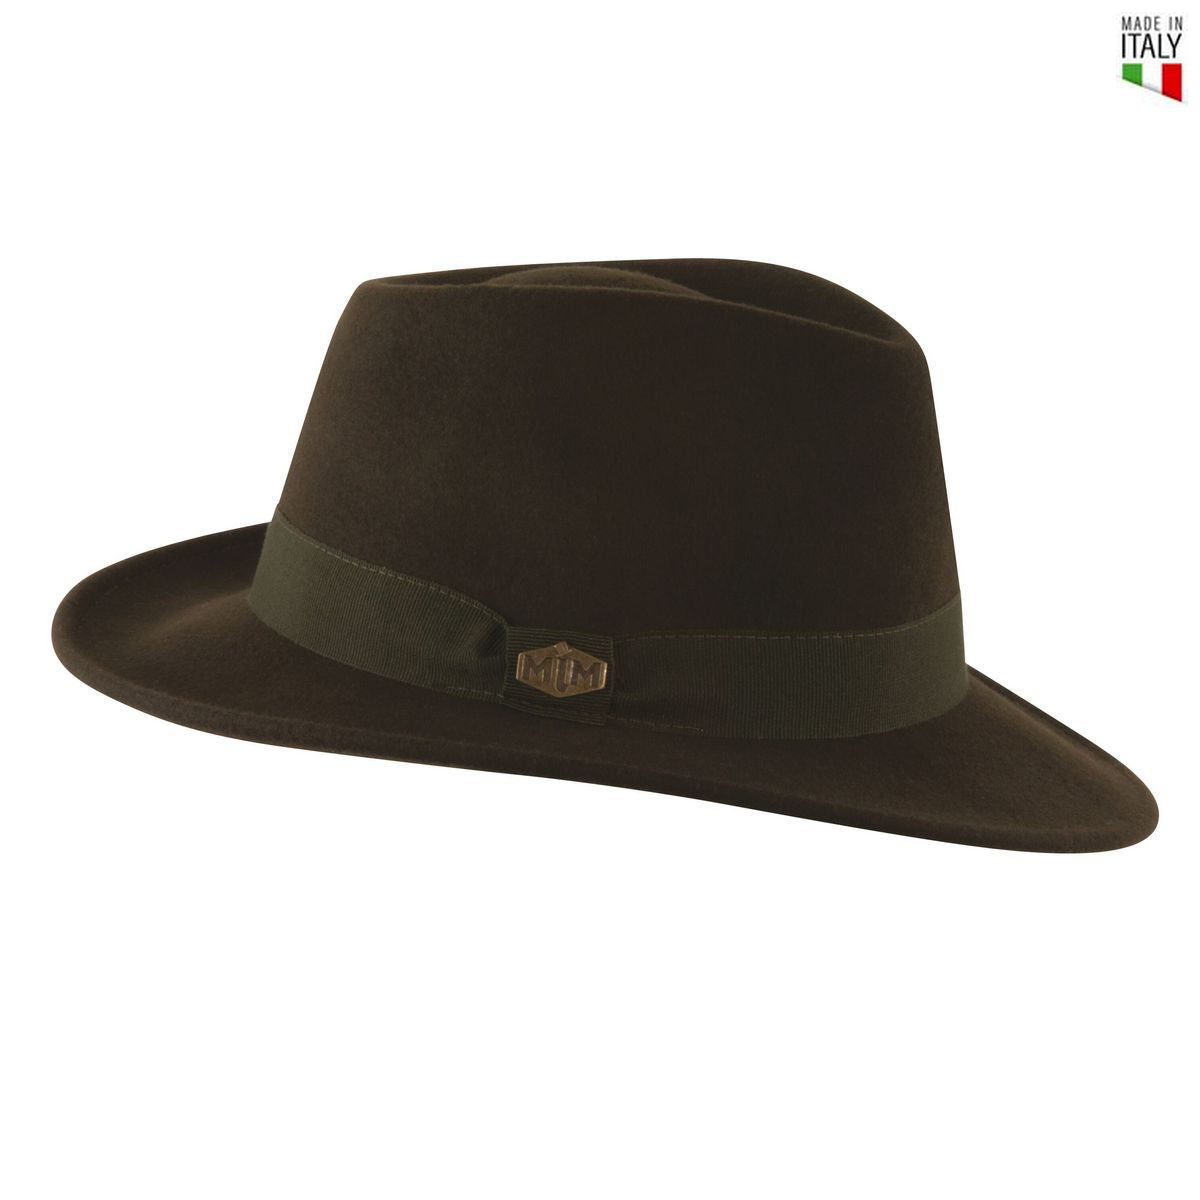 MJM Paul Loden Uld Filt Hat - W&C 56 cm / Small - Fedora Hat fra MJM Hats hos The Prince Webshop